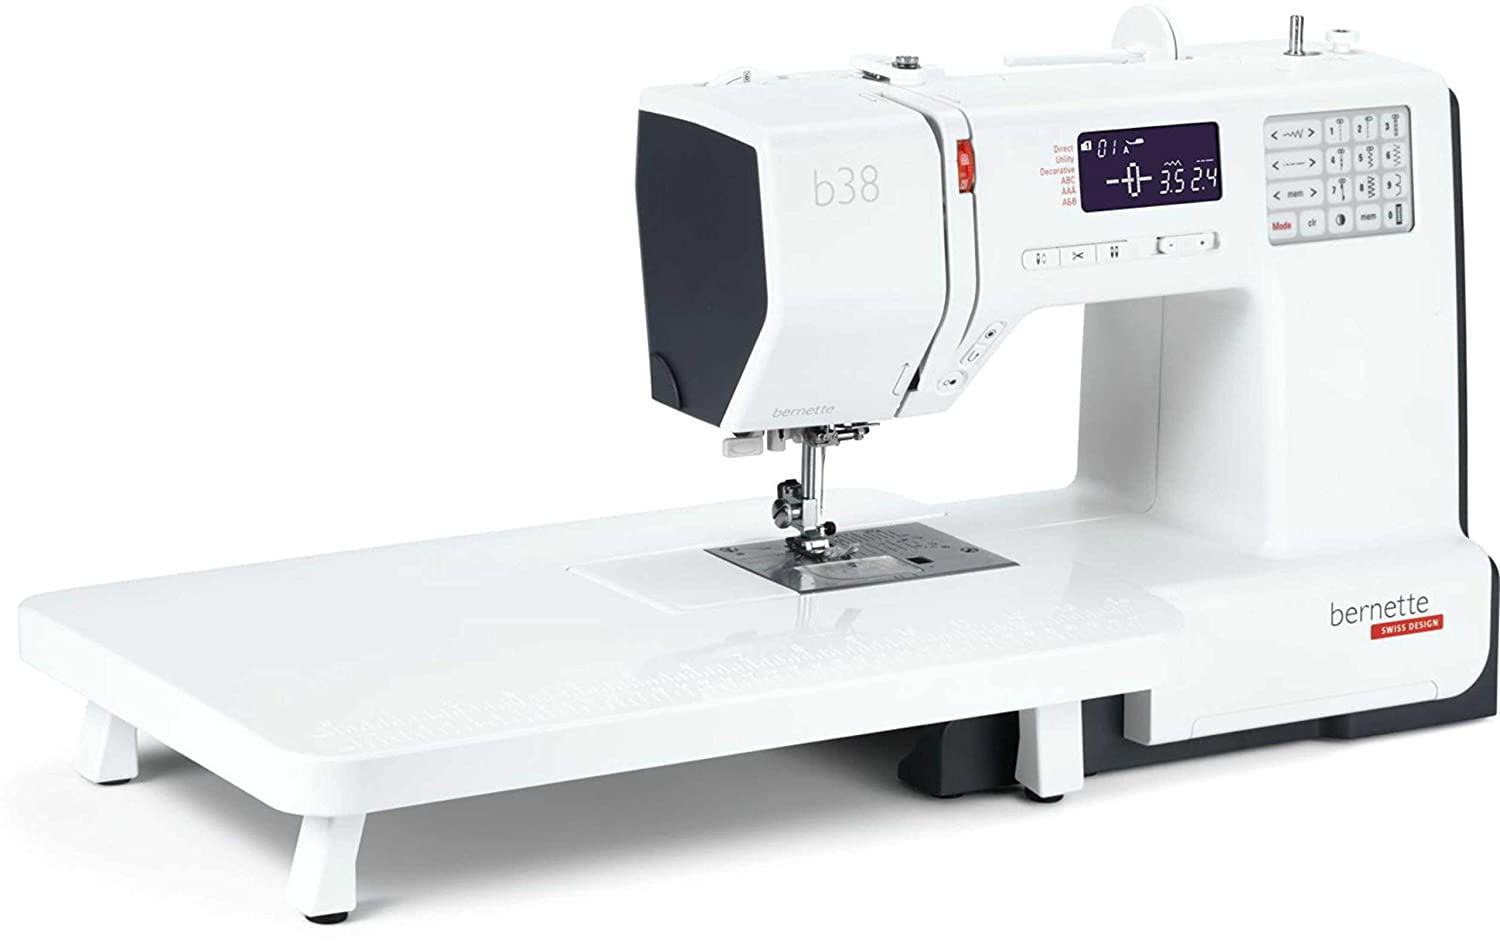 Bernette b38-394 Stitch Designs Computerized Sewing Machine